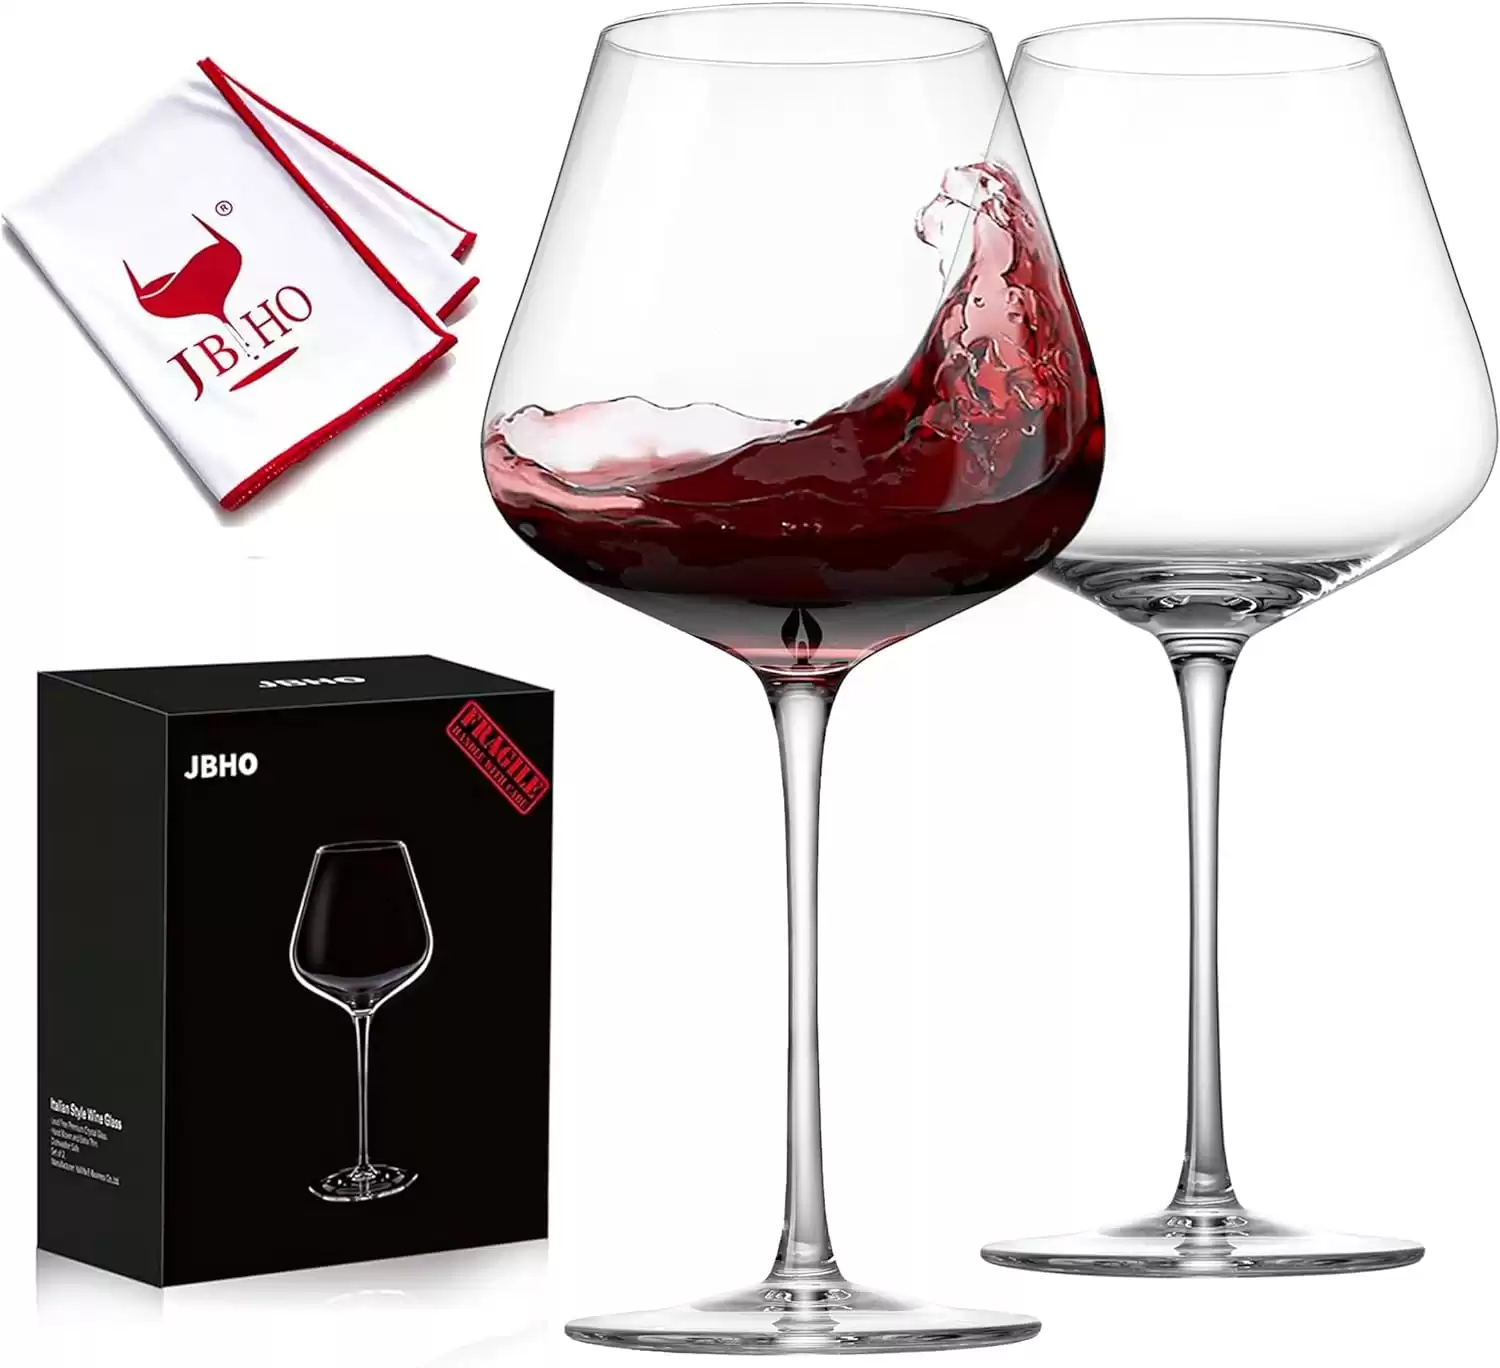 JBHO Hand Blown Crystal Burgundy Wine Glasses – Set of 2